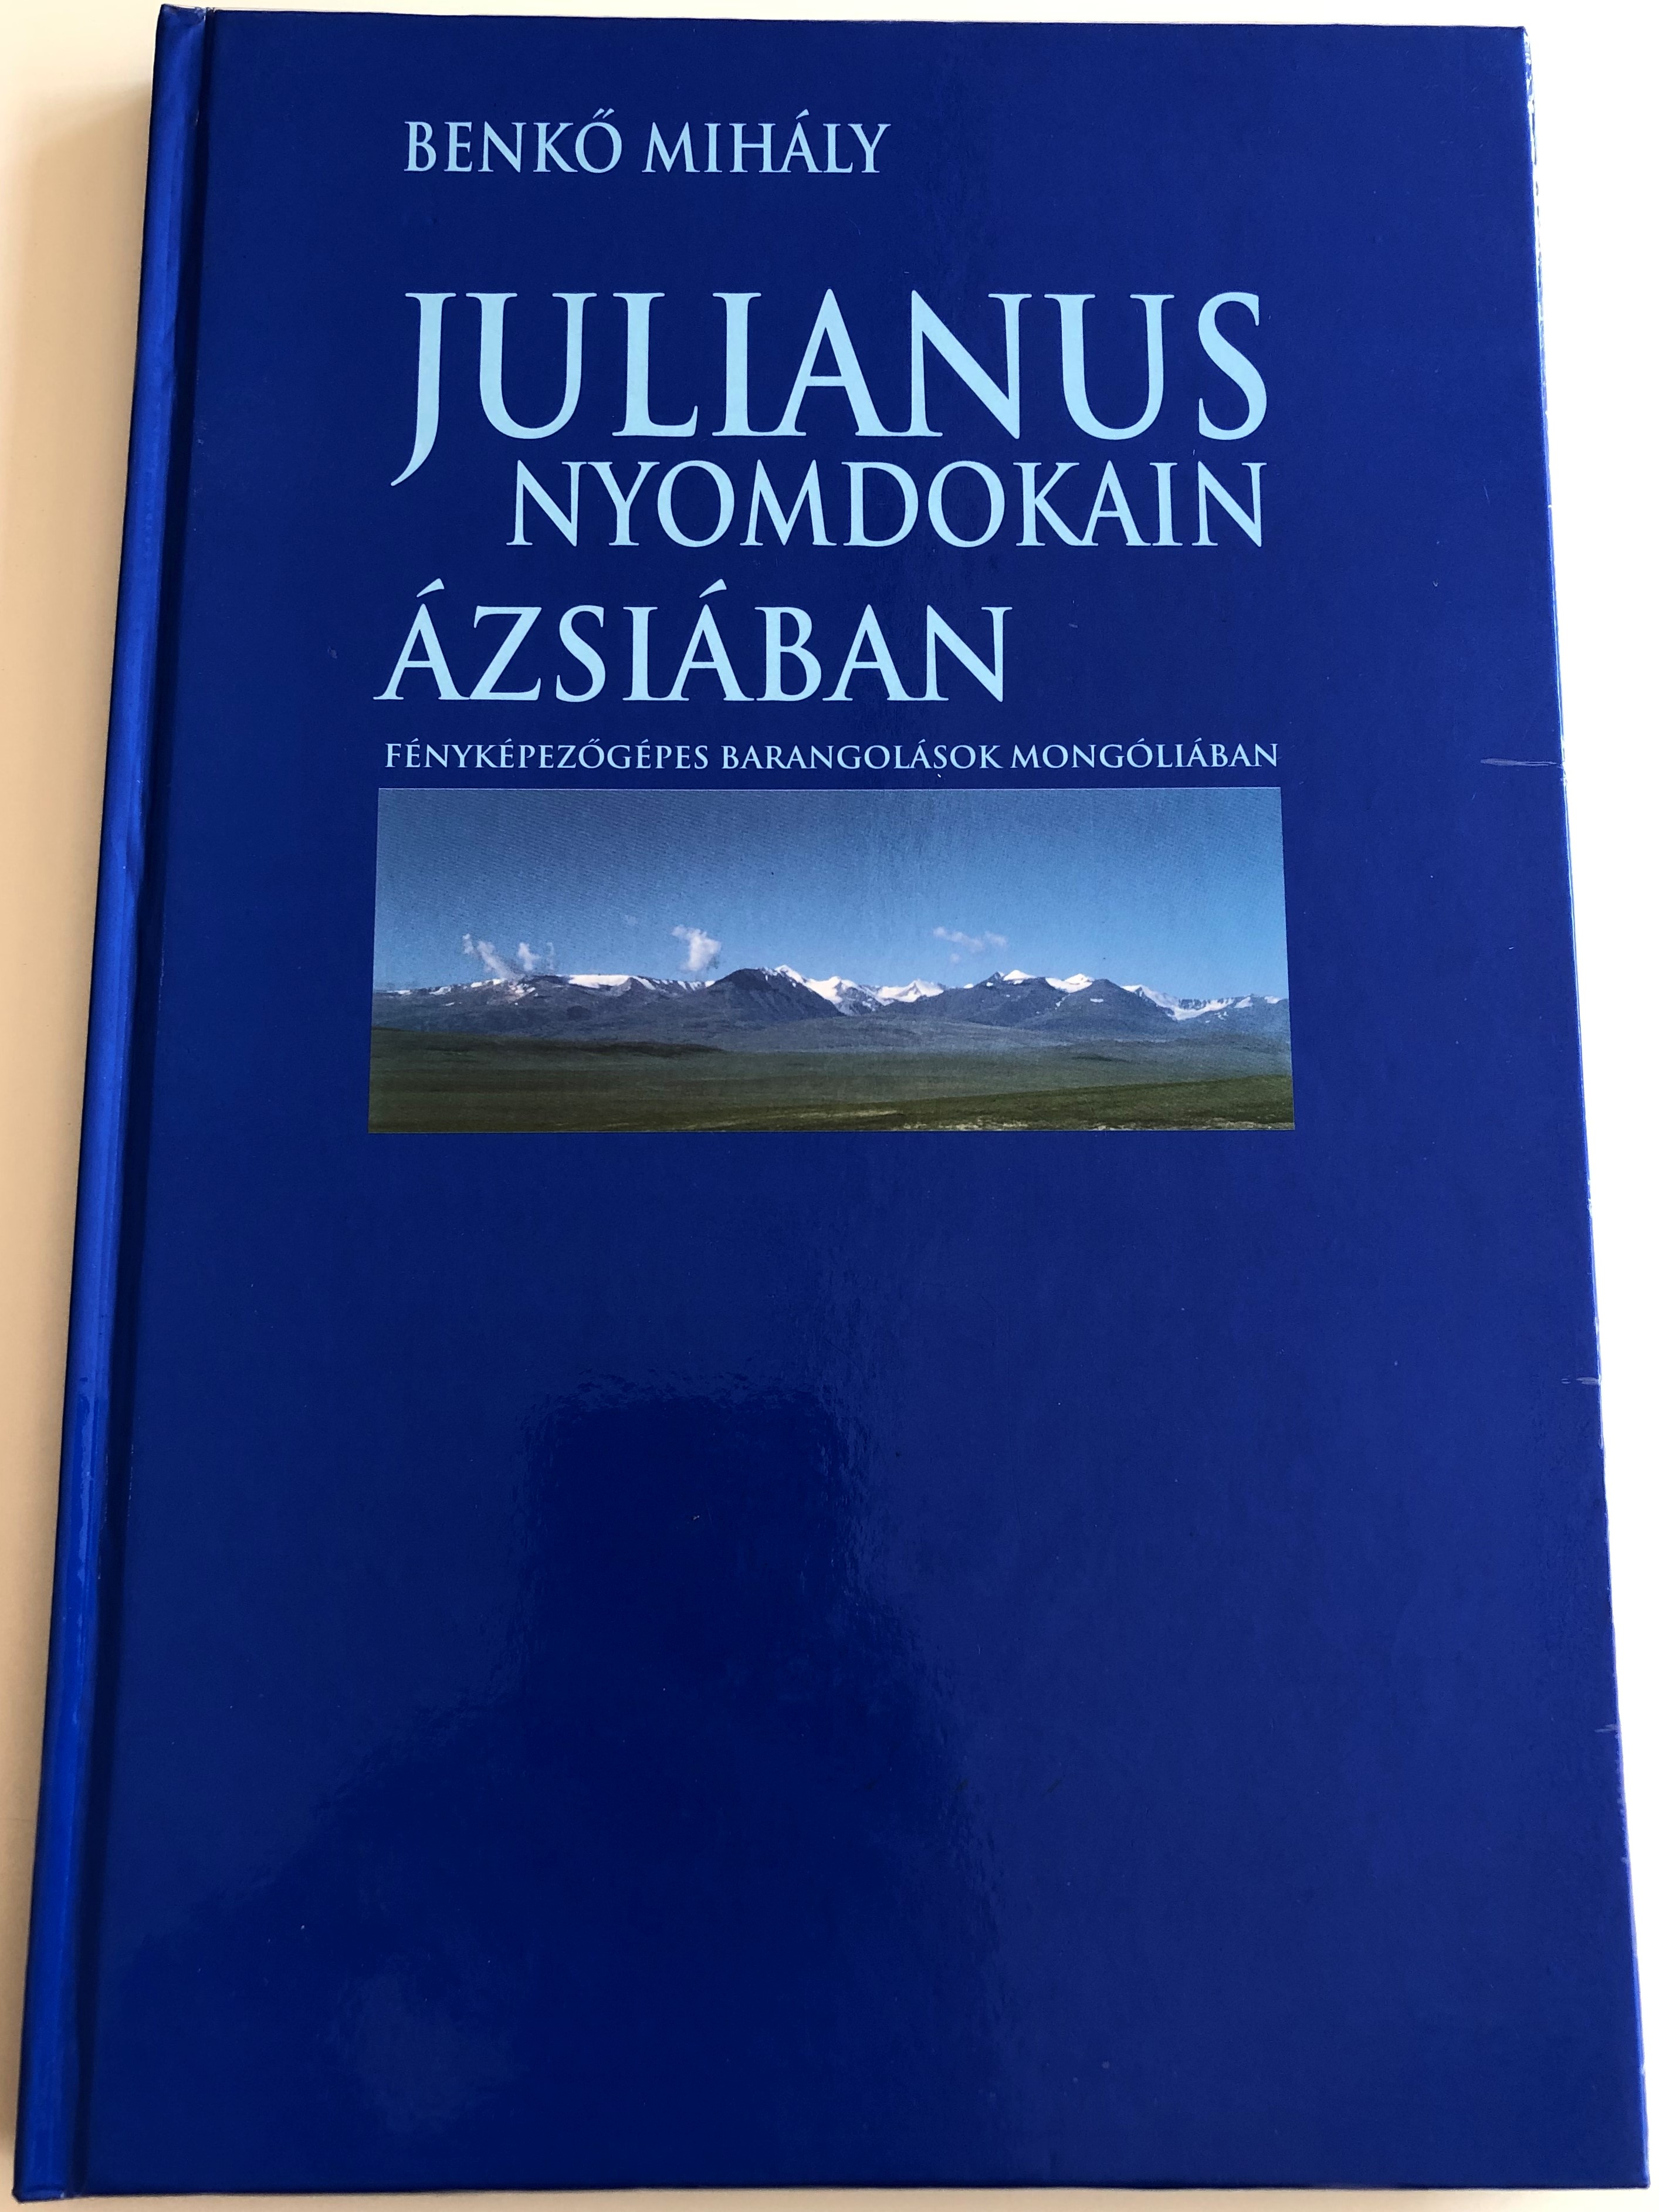 julianus-nyomdokain-zsi-ban-by-benk-mih-ly-f-nyk-pez-g-pes-barangol-sok-mong-li-ban-photographical-journey-through-mongolia-timp-kiad-2001-1-.jpg